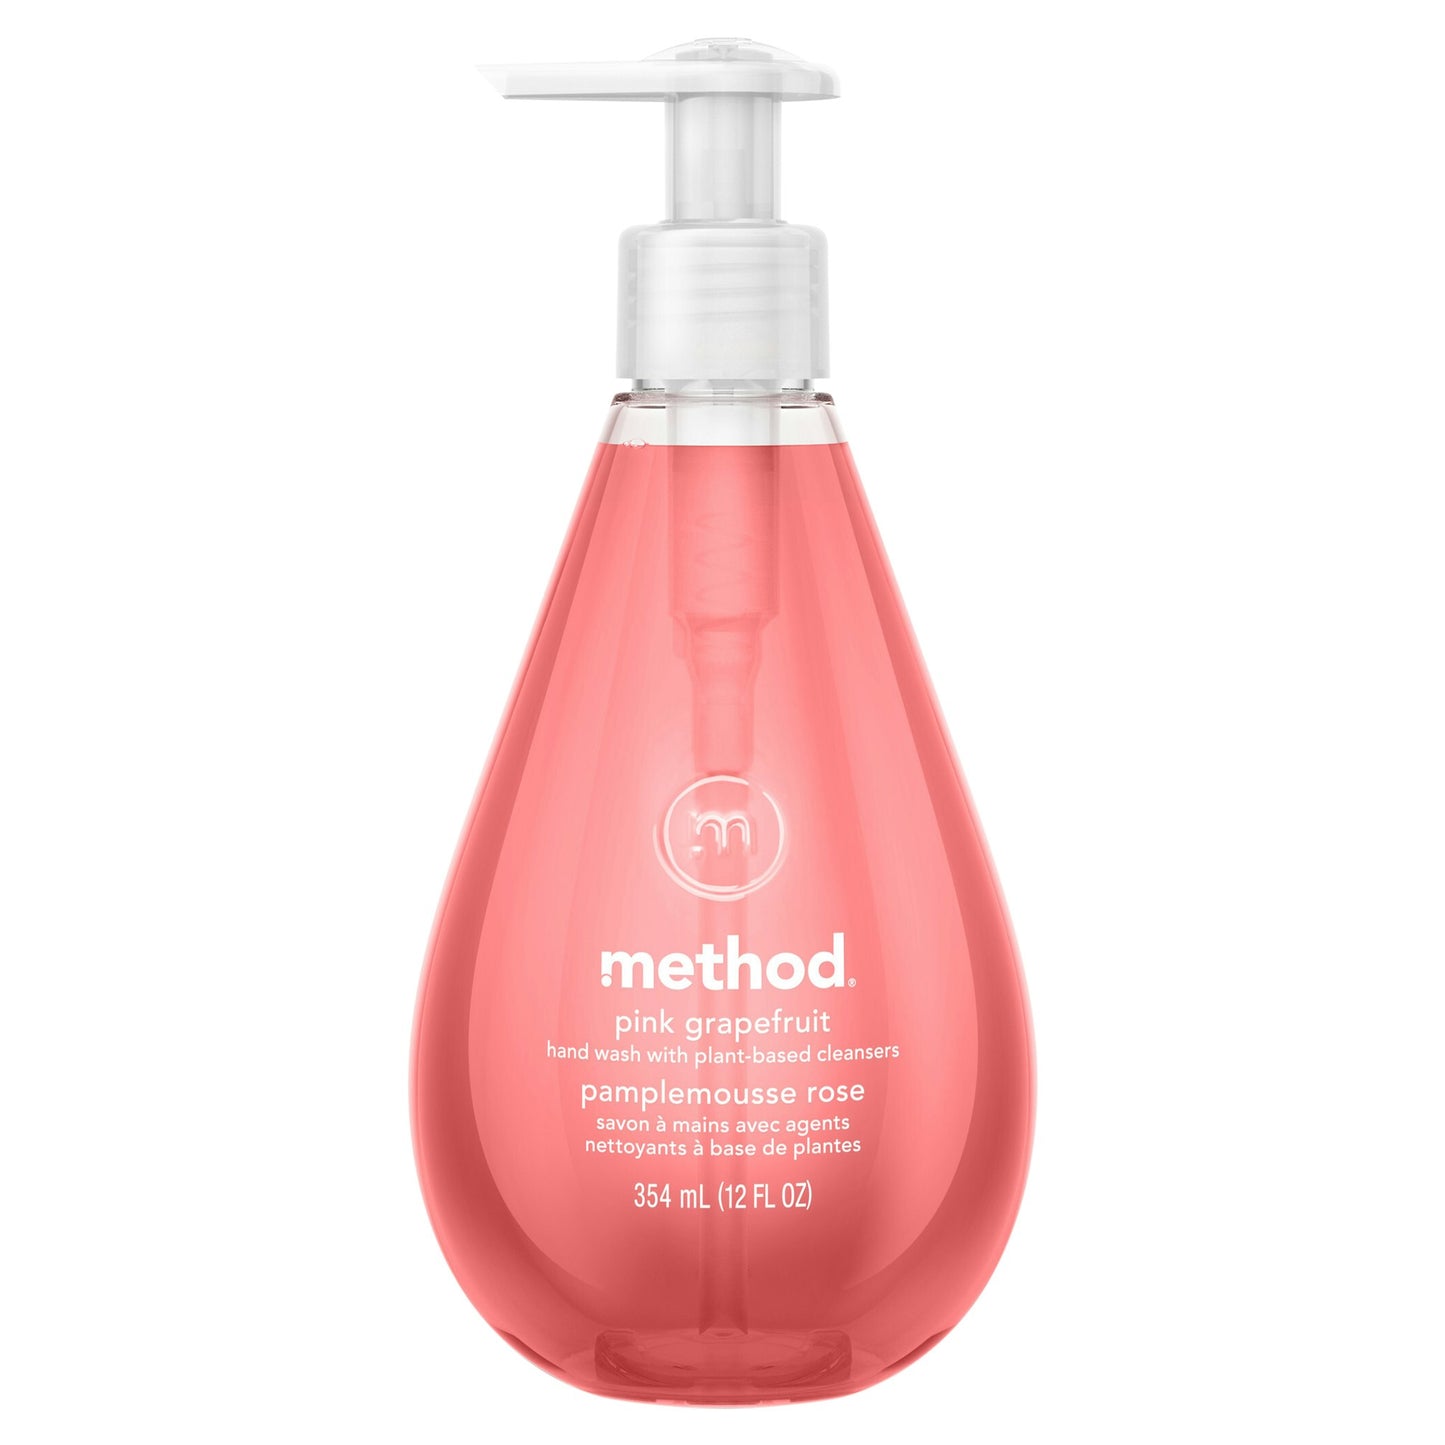 Method Home Care Hand Wash Pink Grapefruit 12 Oz (Pack of 6)